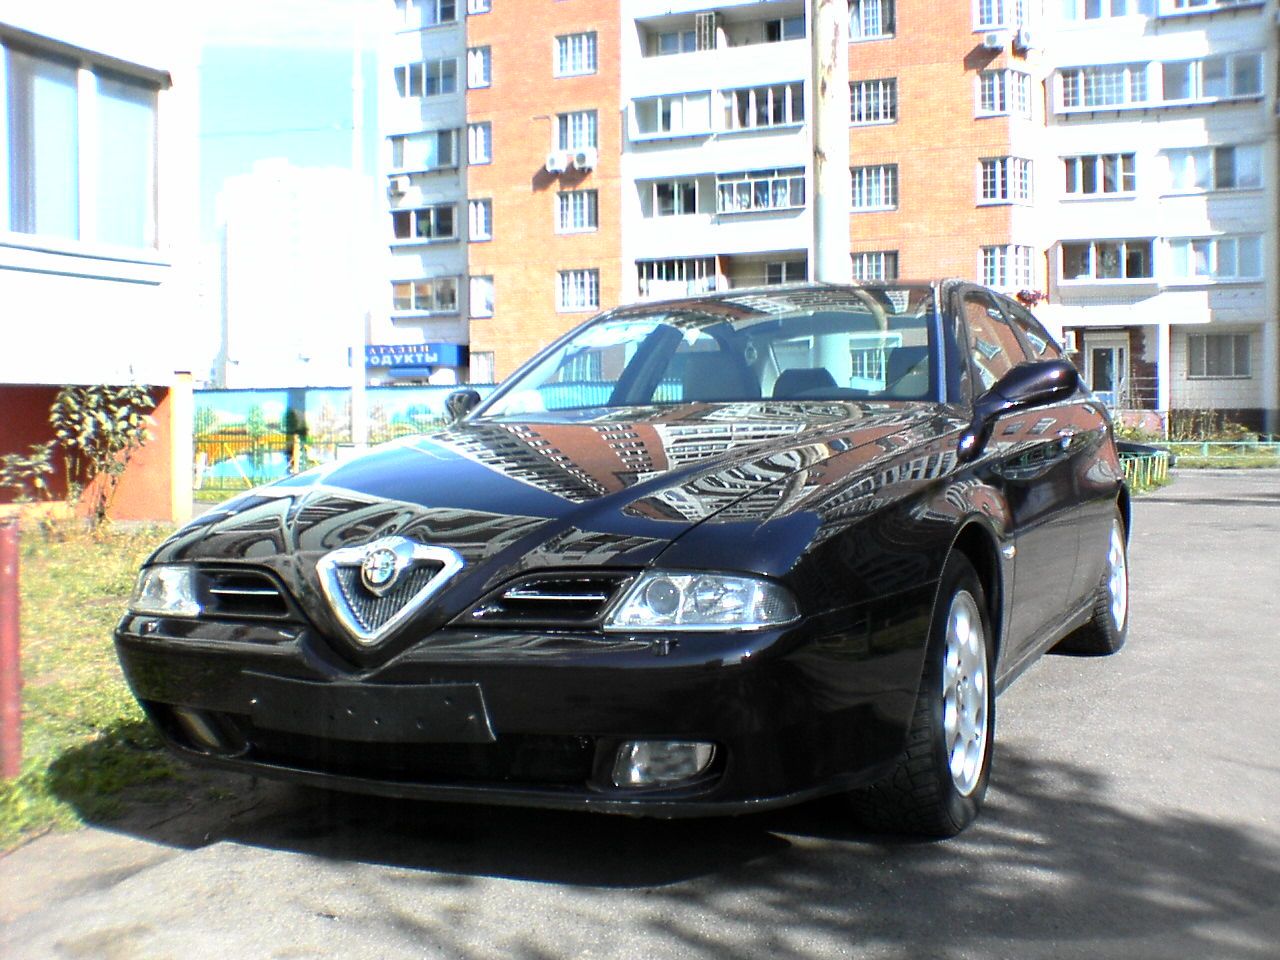 2002 Alfa Romeo 166